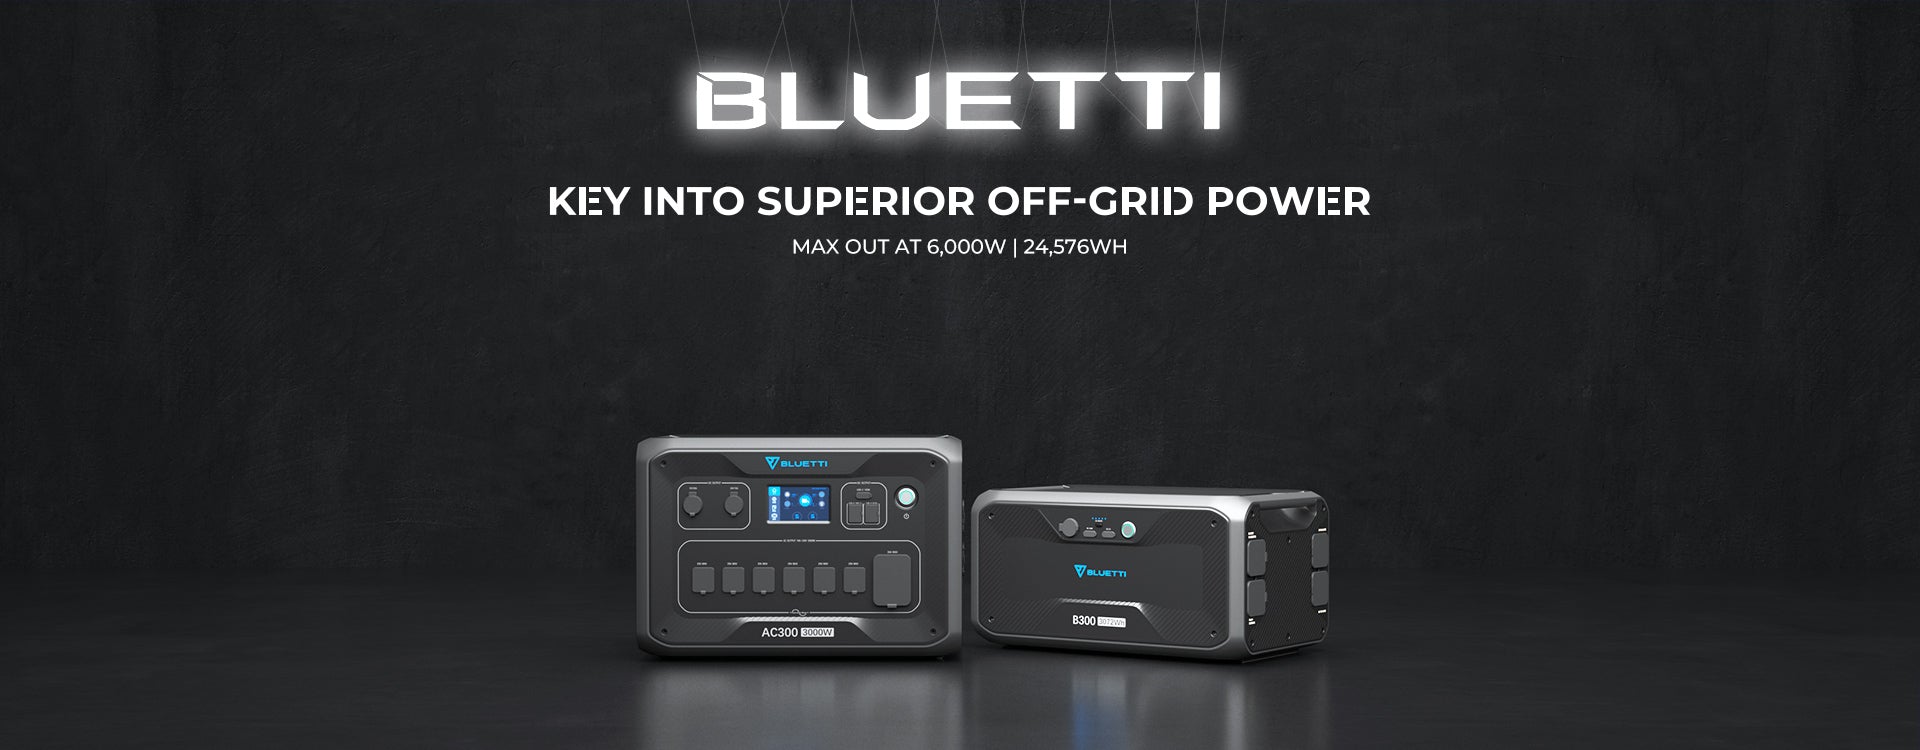 BLUETTI AC300+B300 POWER STATION COMBO DEALS